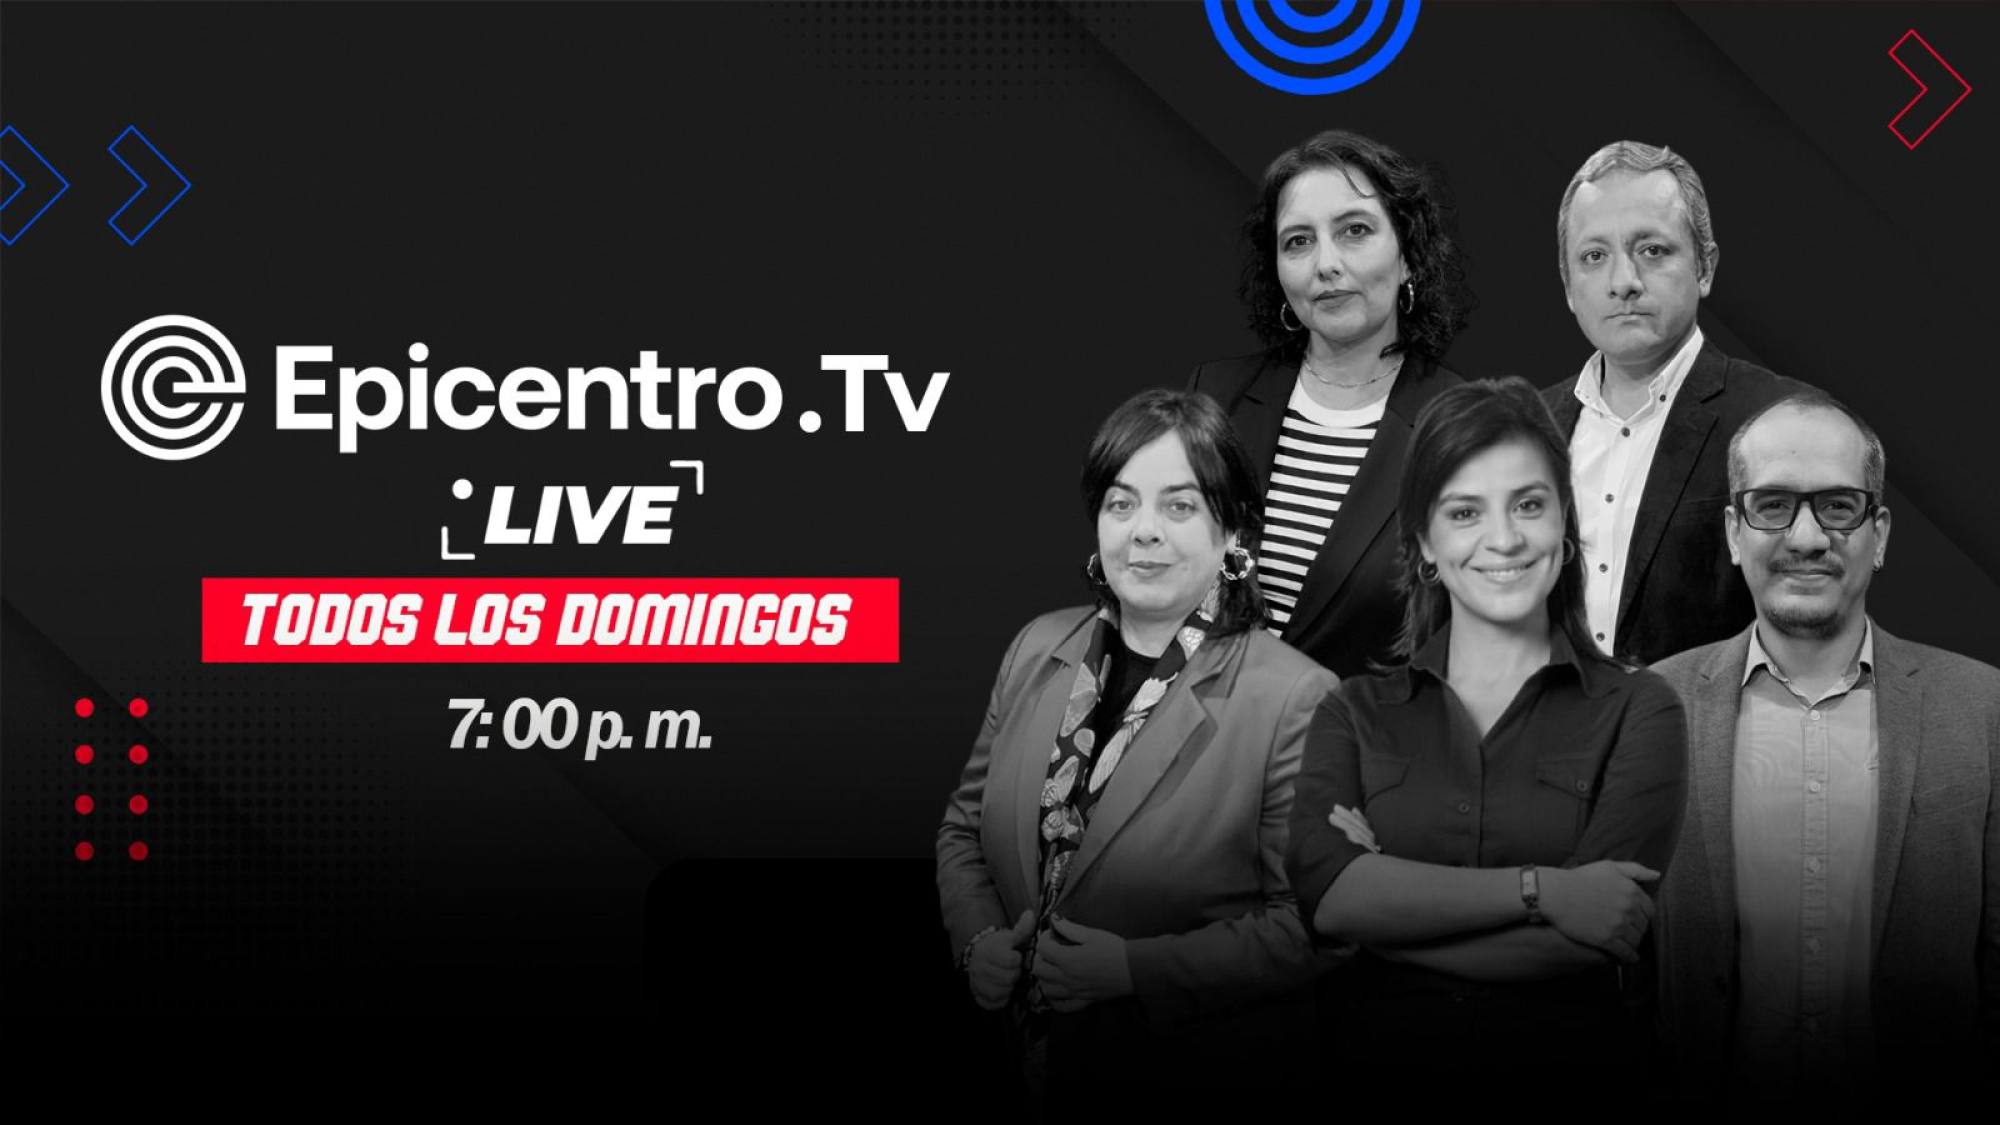 Epicentro TV Live | Este domingo a las 7 p. m., Epicentro TV